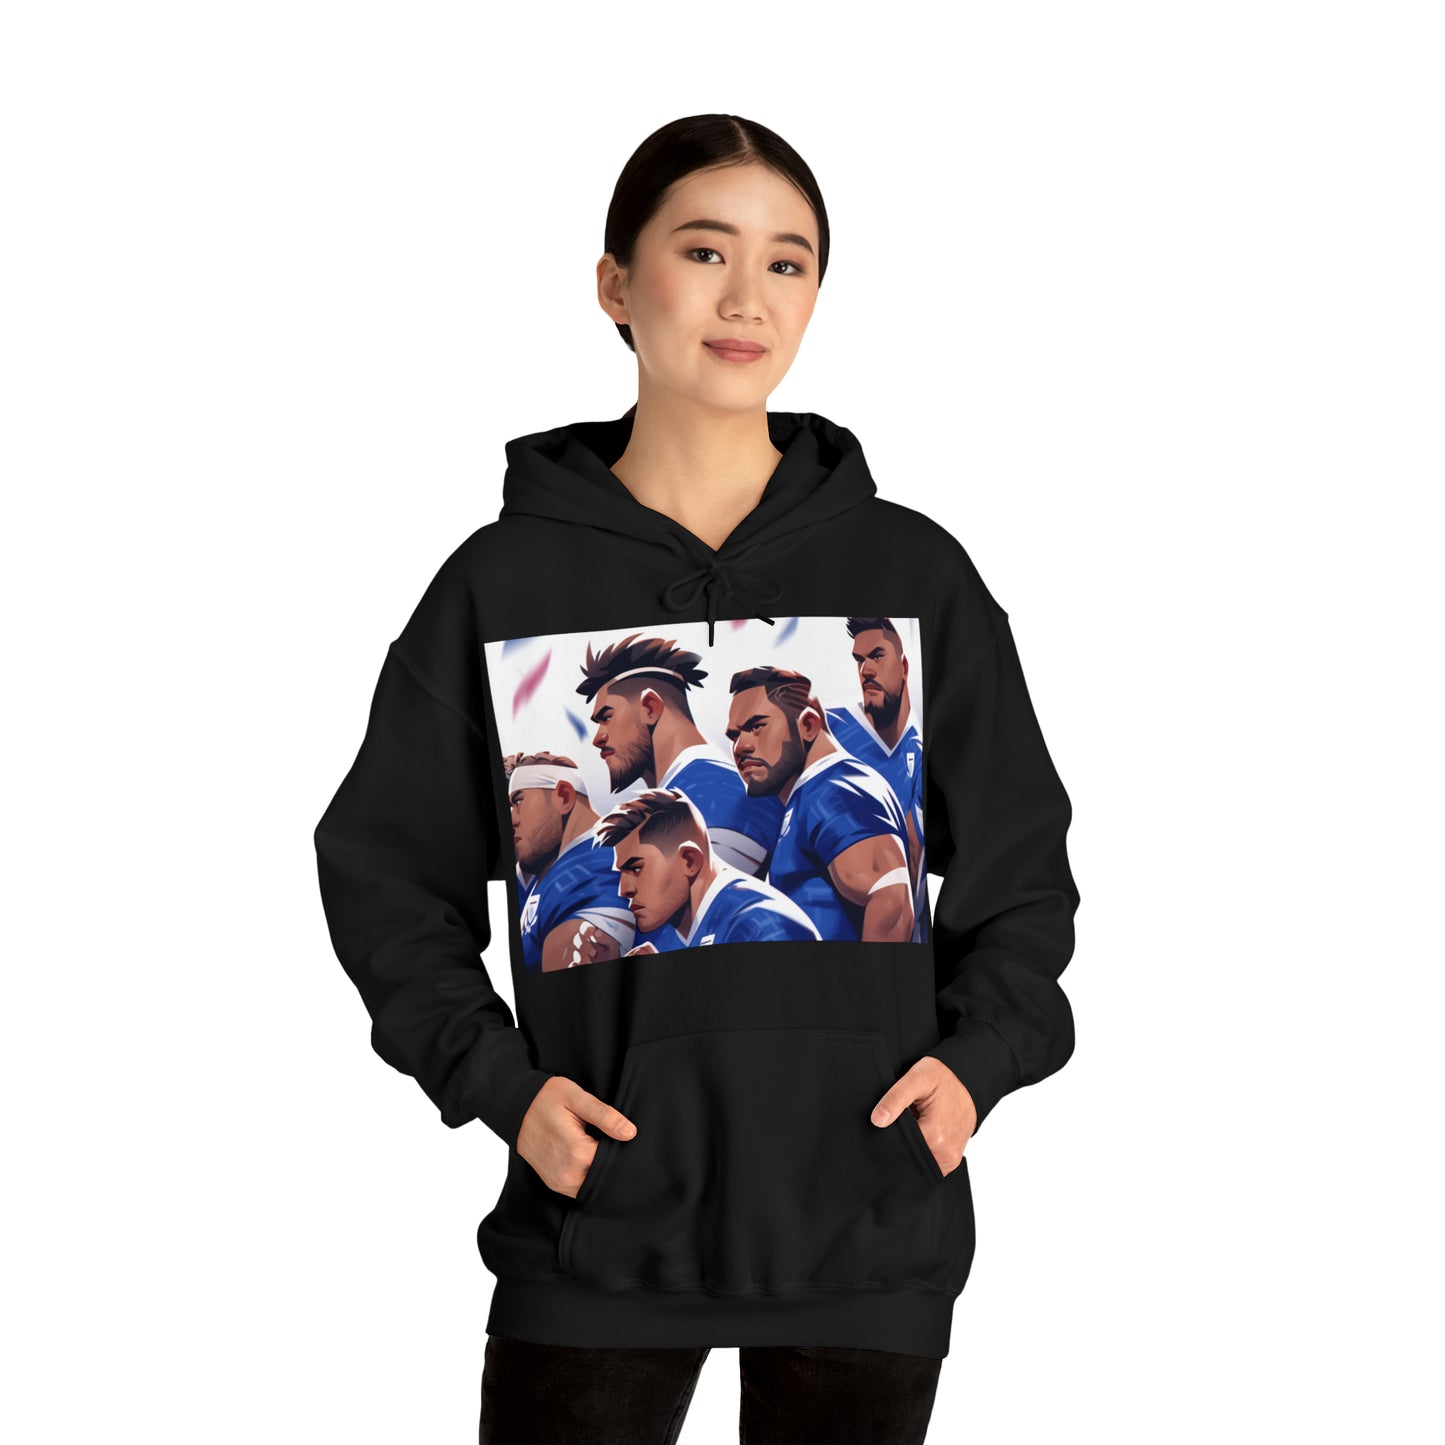 Ready Samoa - dark hoodies